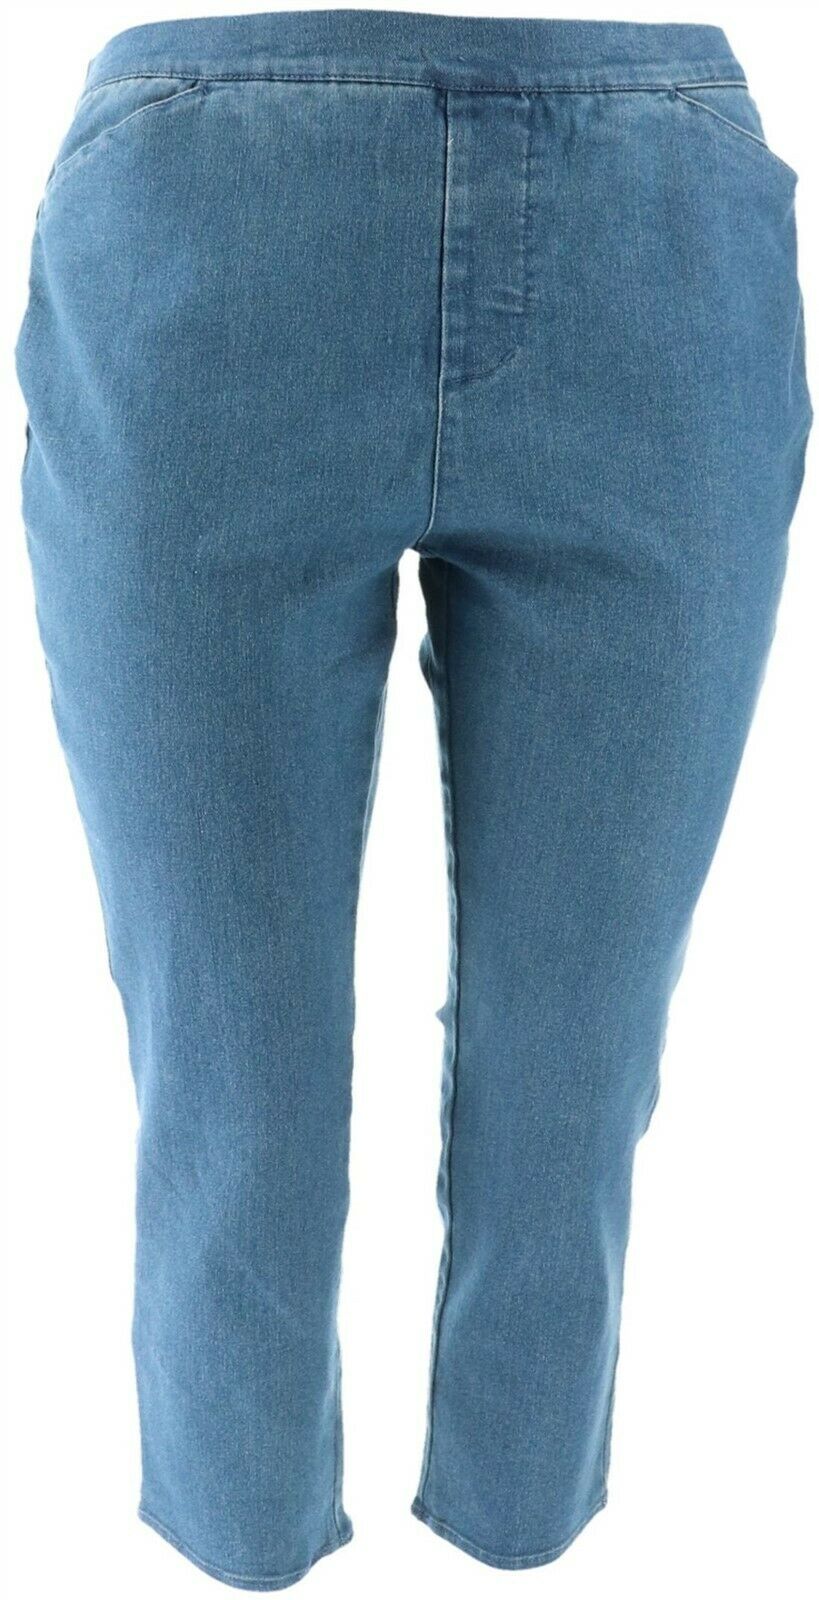 liz claiborne jeans petite